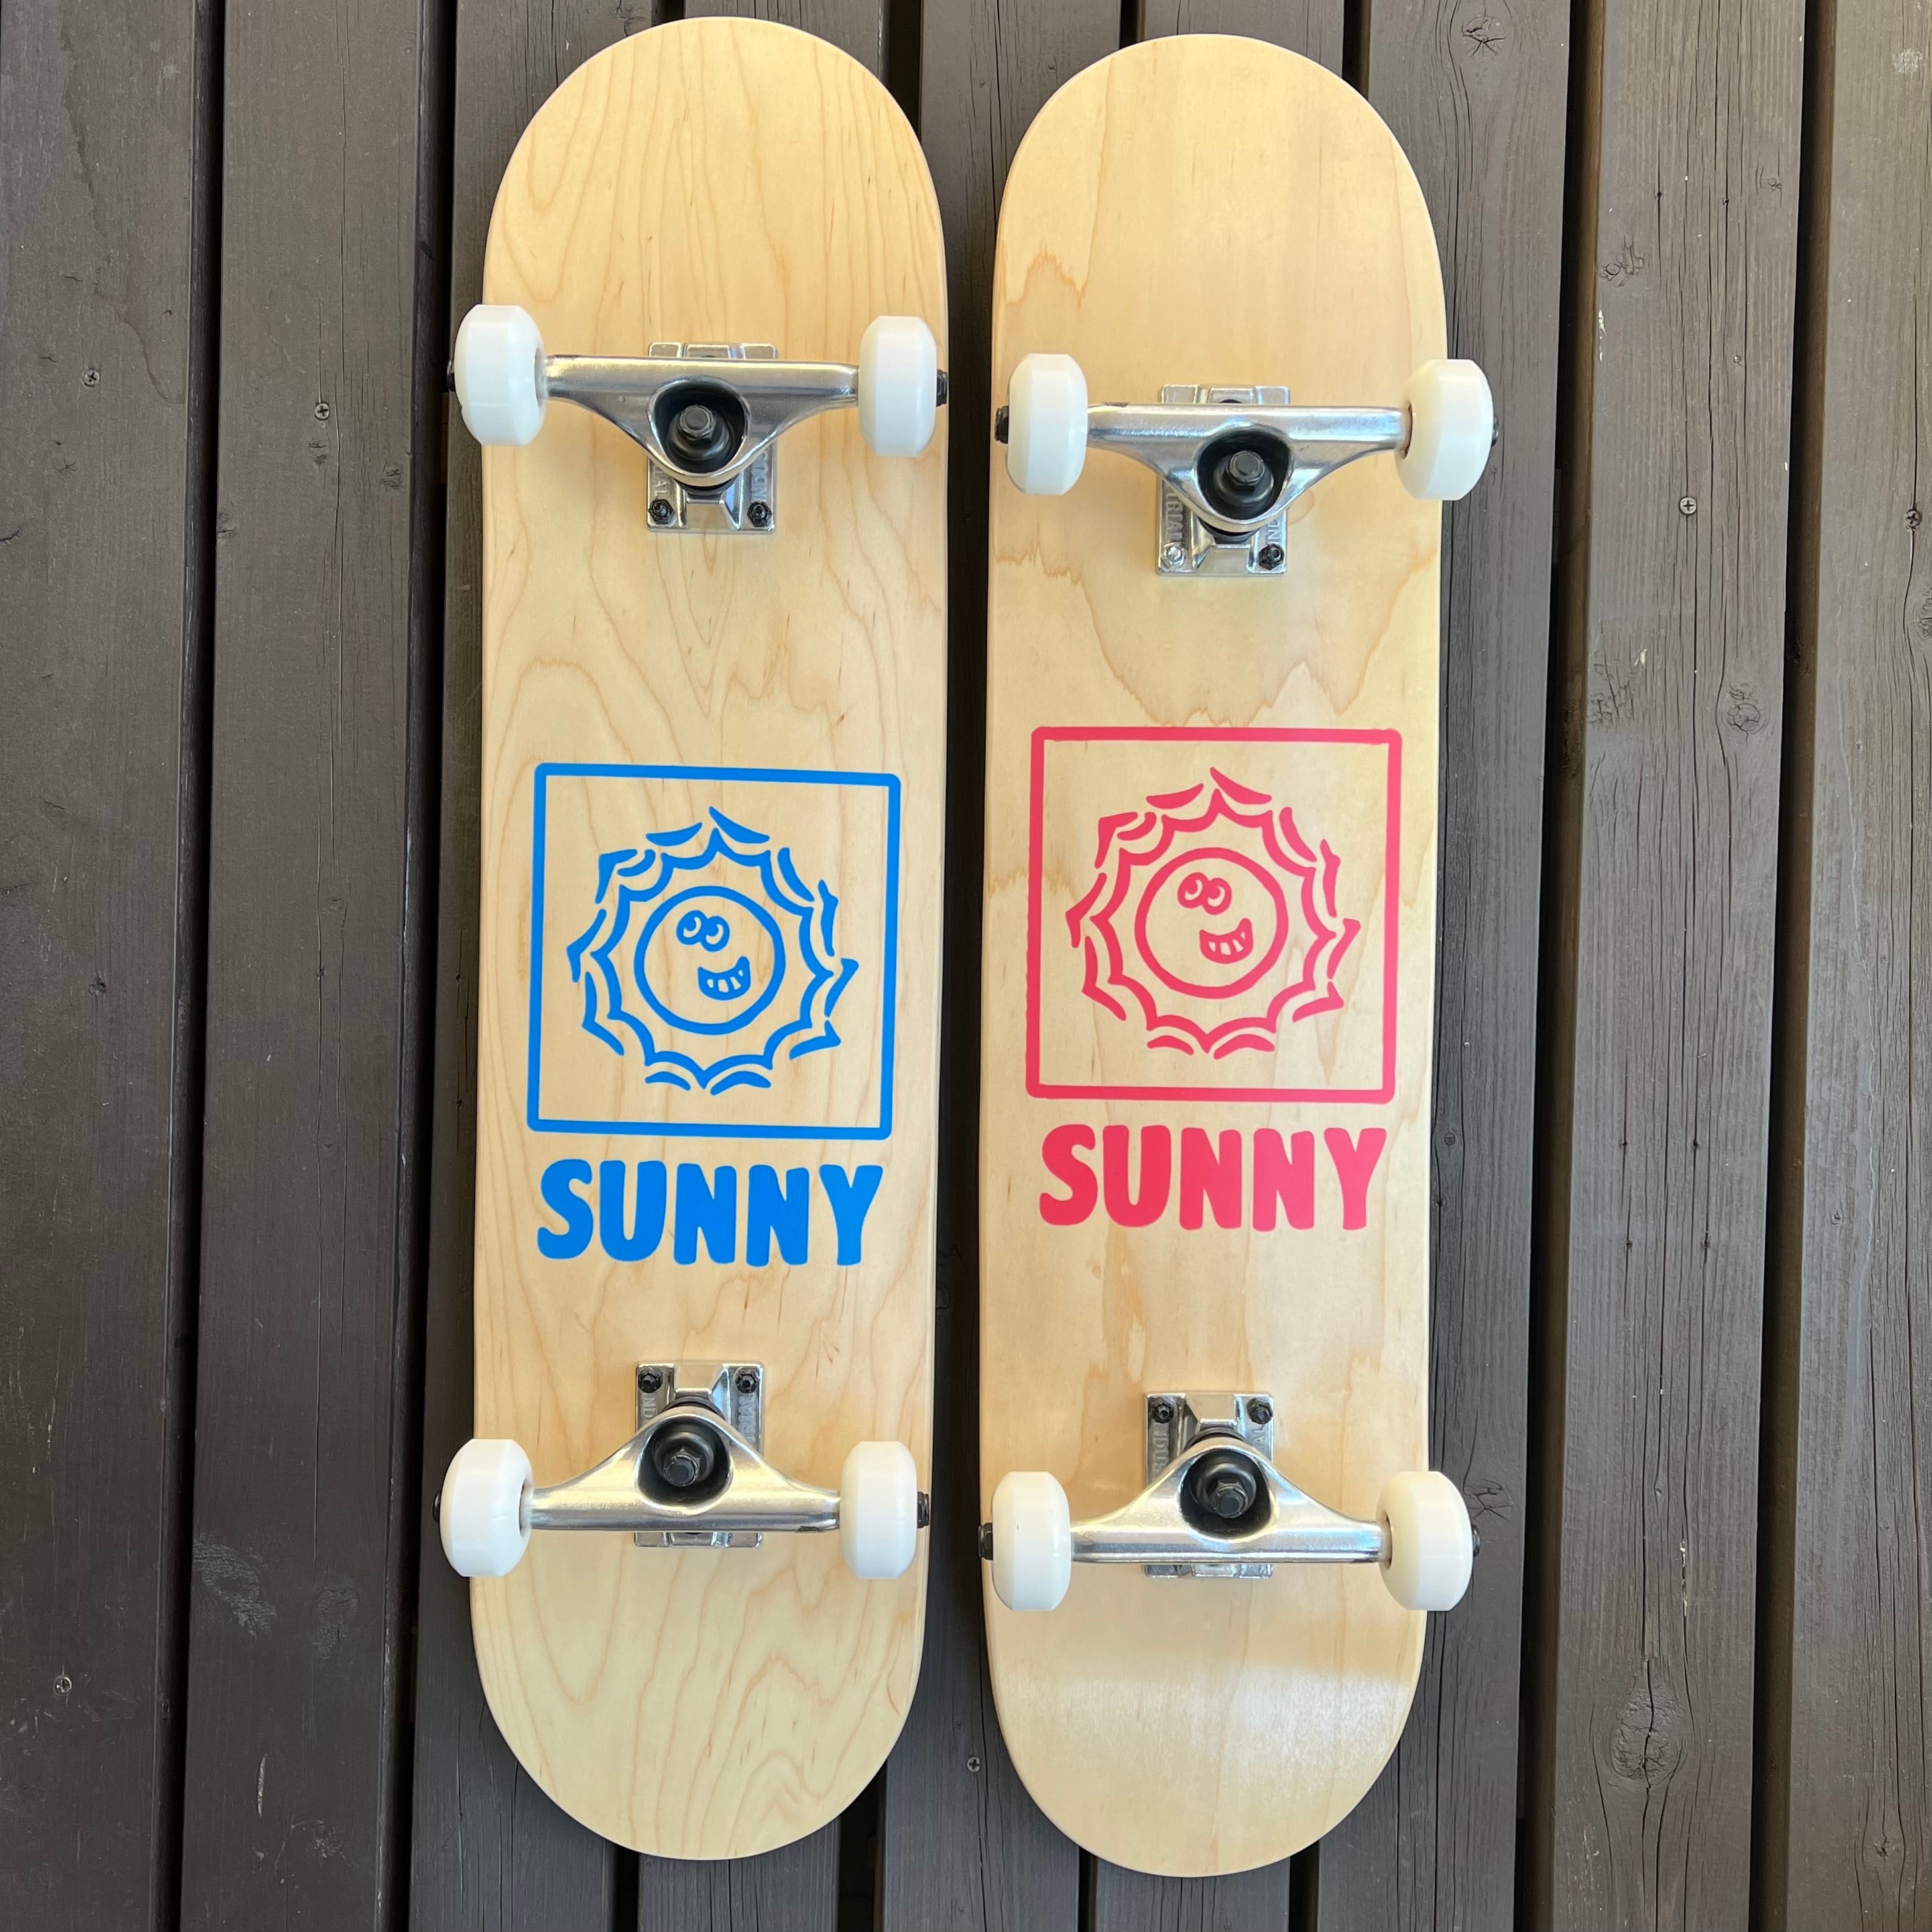 SUNNY 8.0 スケボー - スケートボード